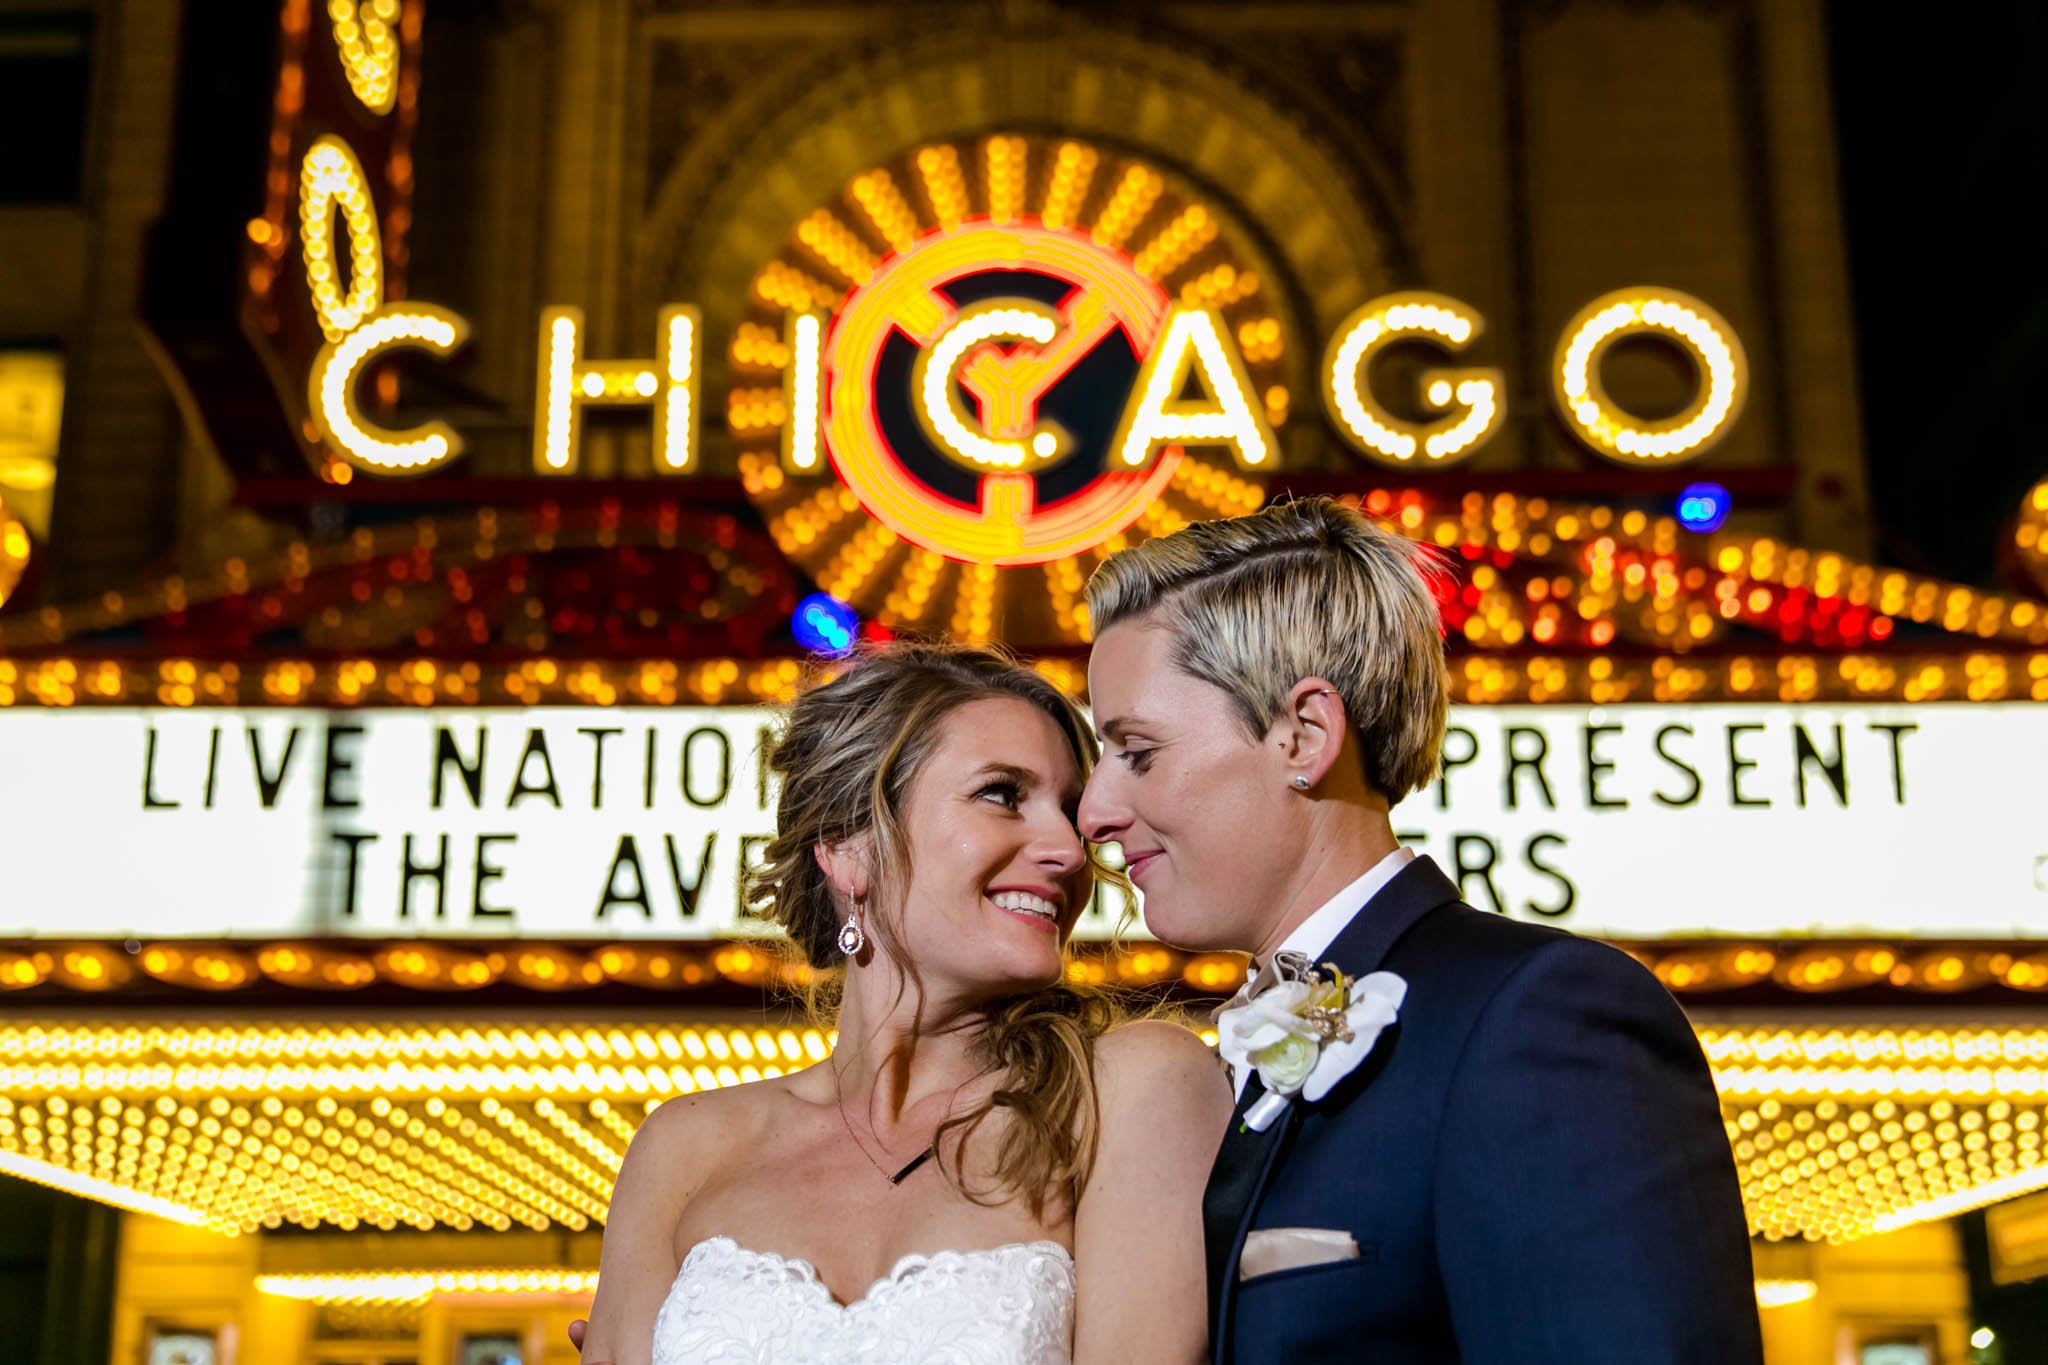 North Park wedding photographer - Chicago